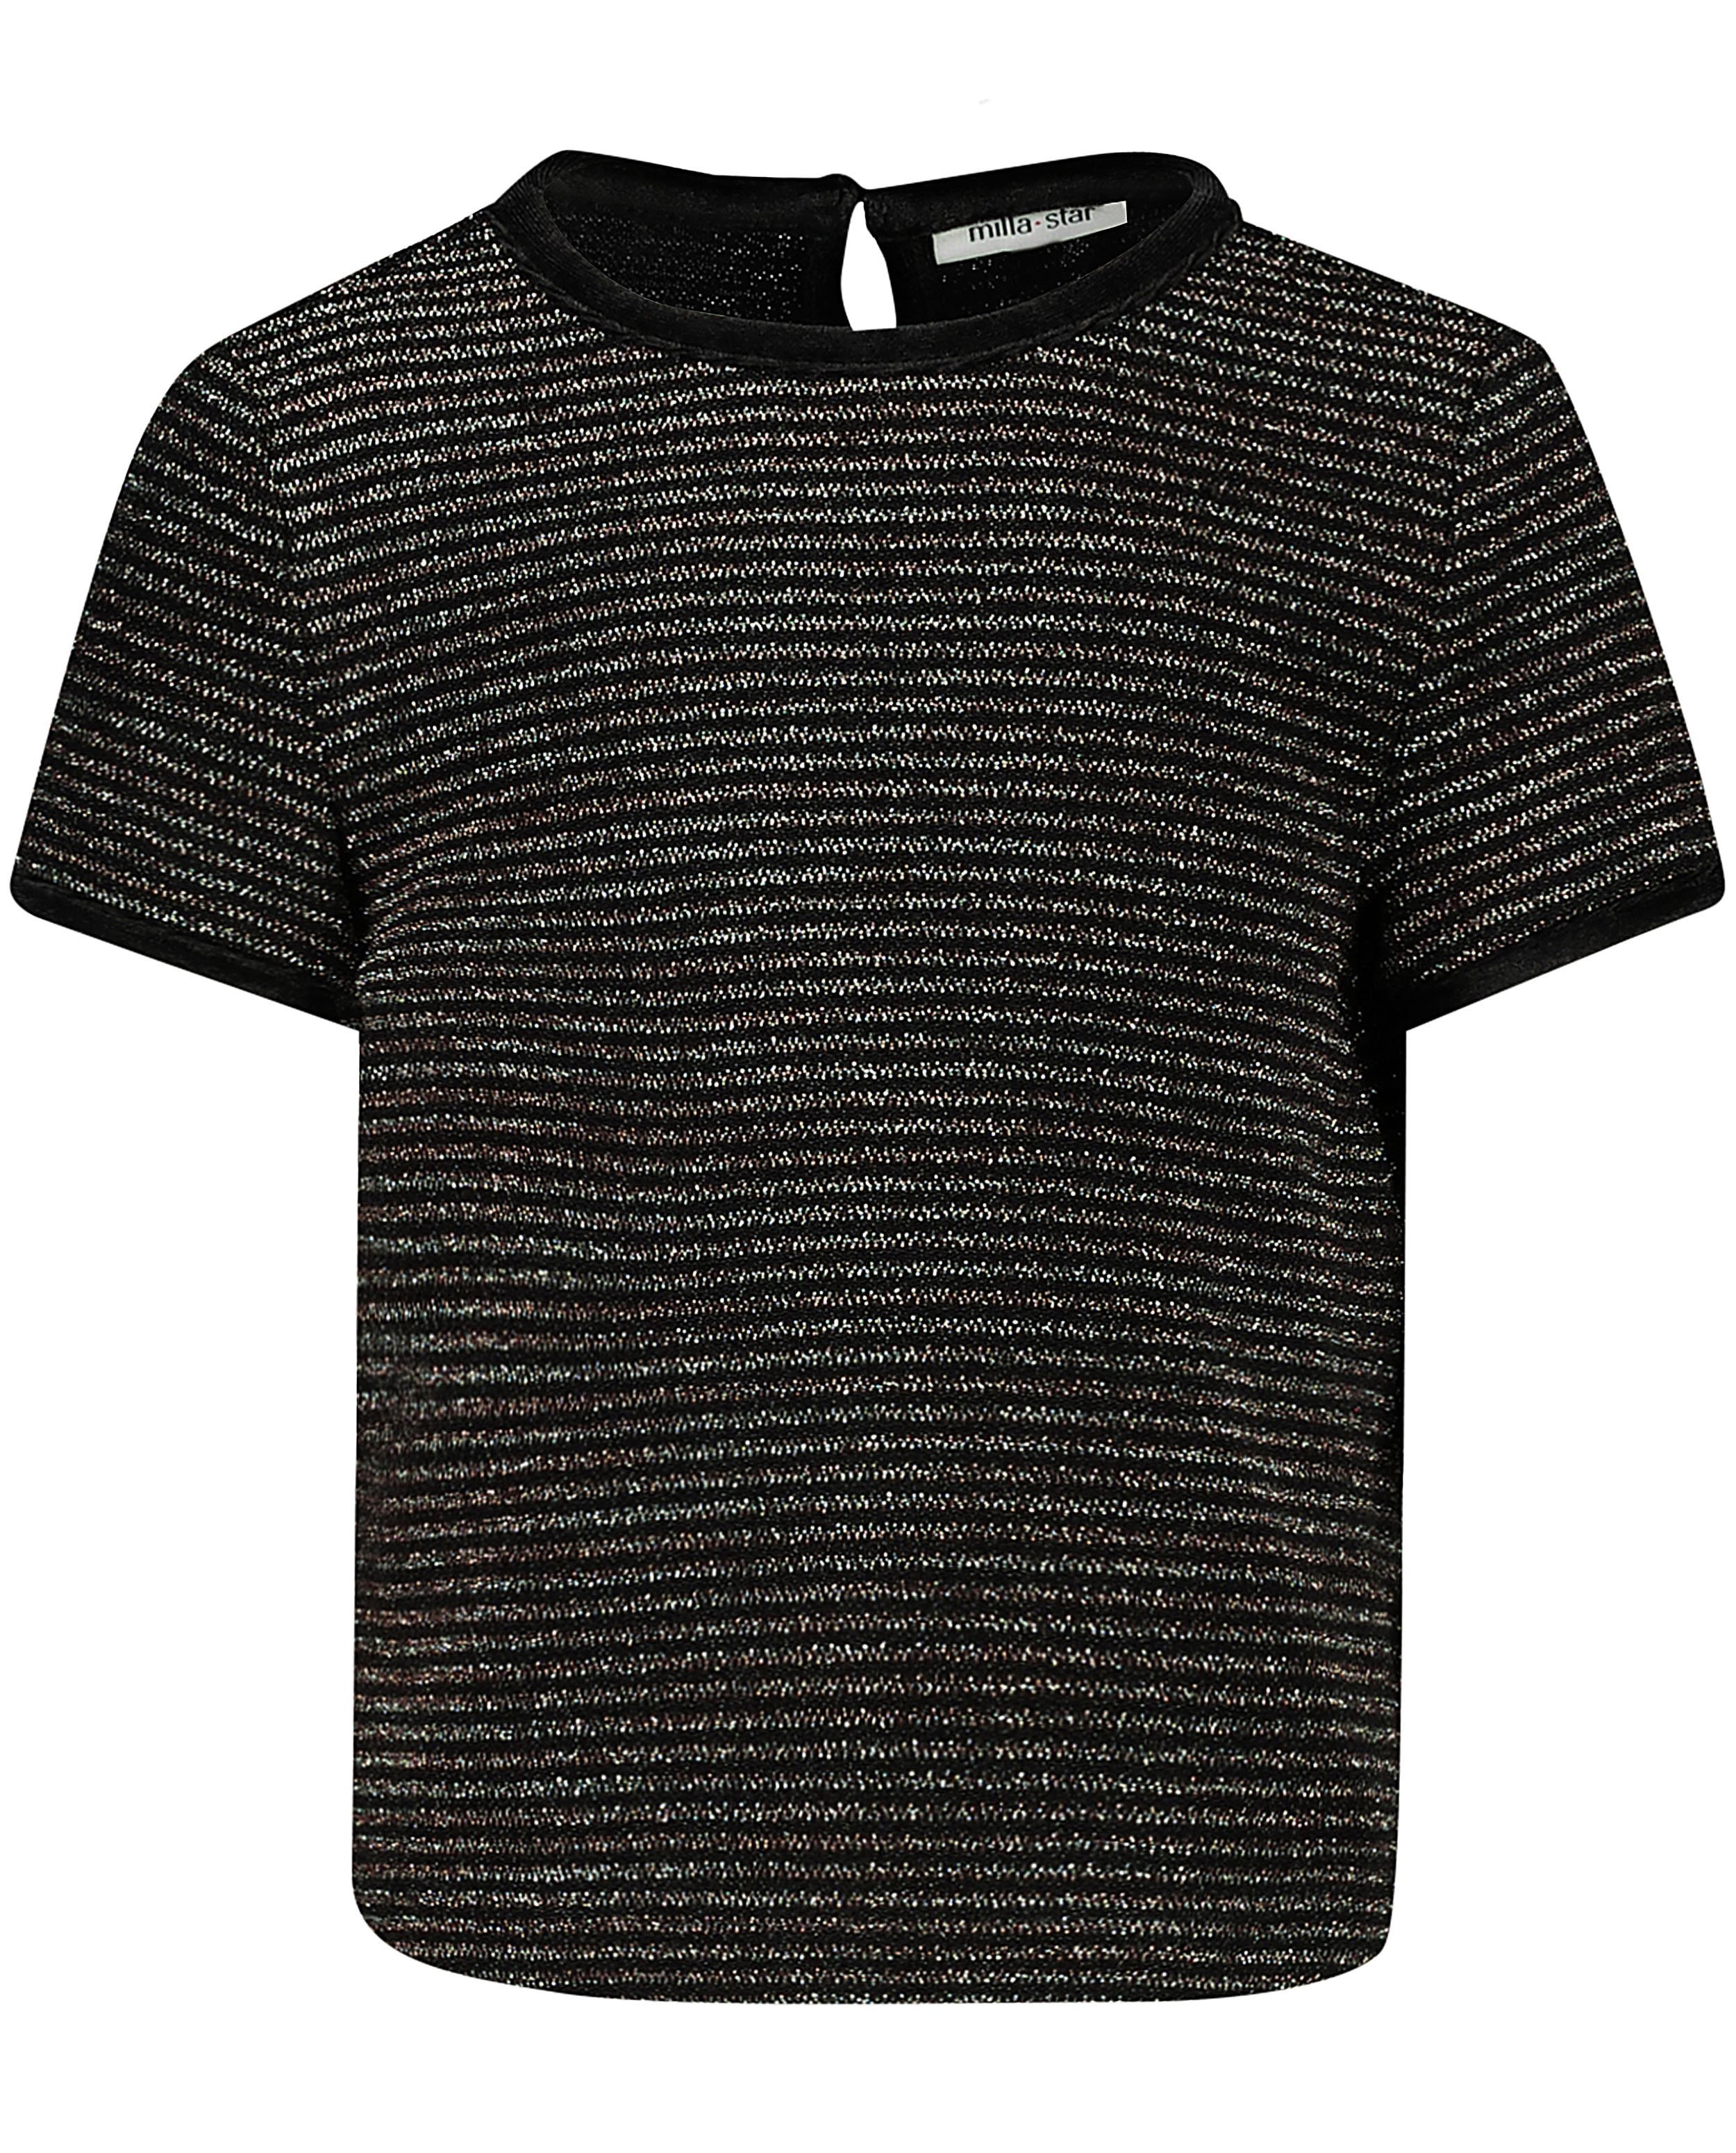 T-shirts - Zwart shirt met metaaldraad